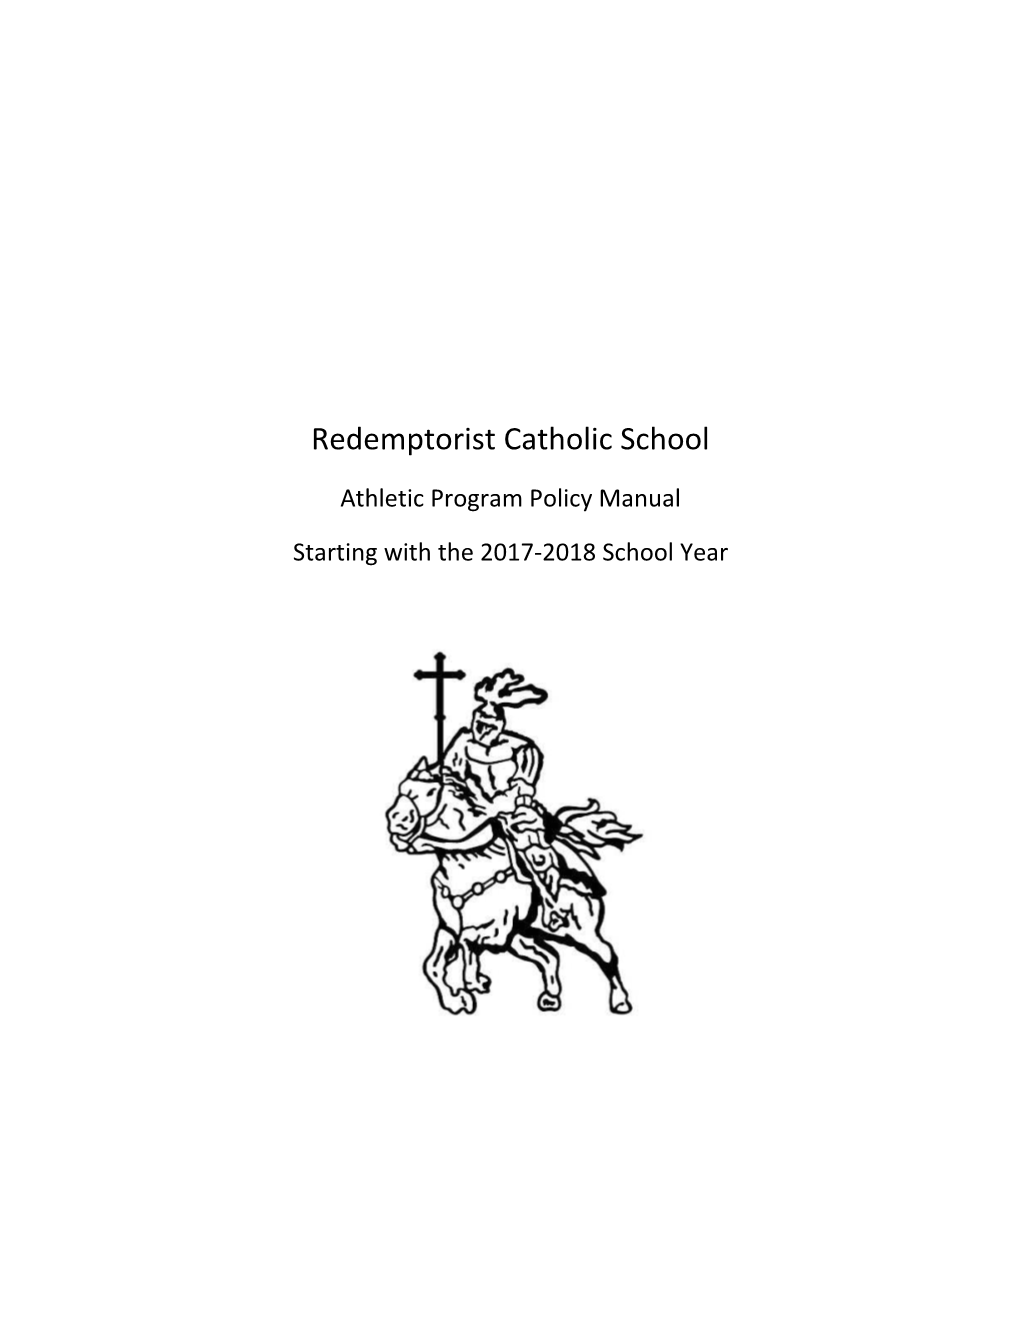 Redemptorist Catholic Athletic Mission Statement